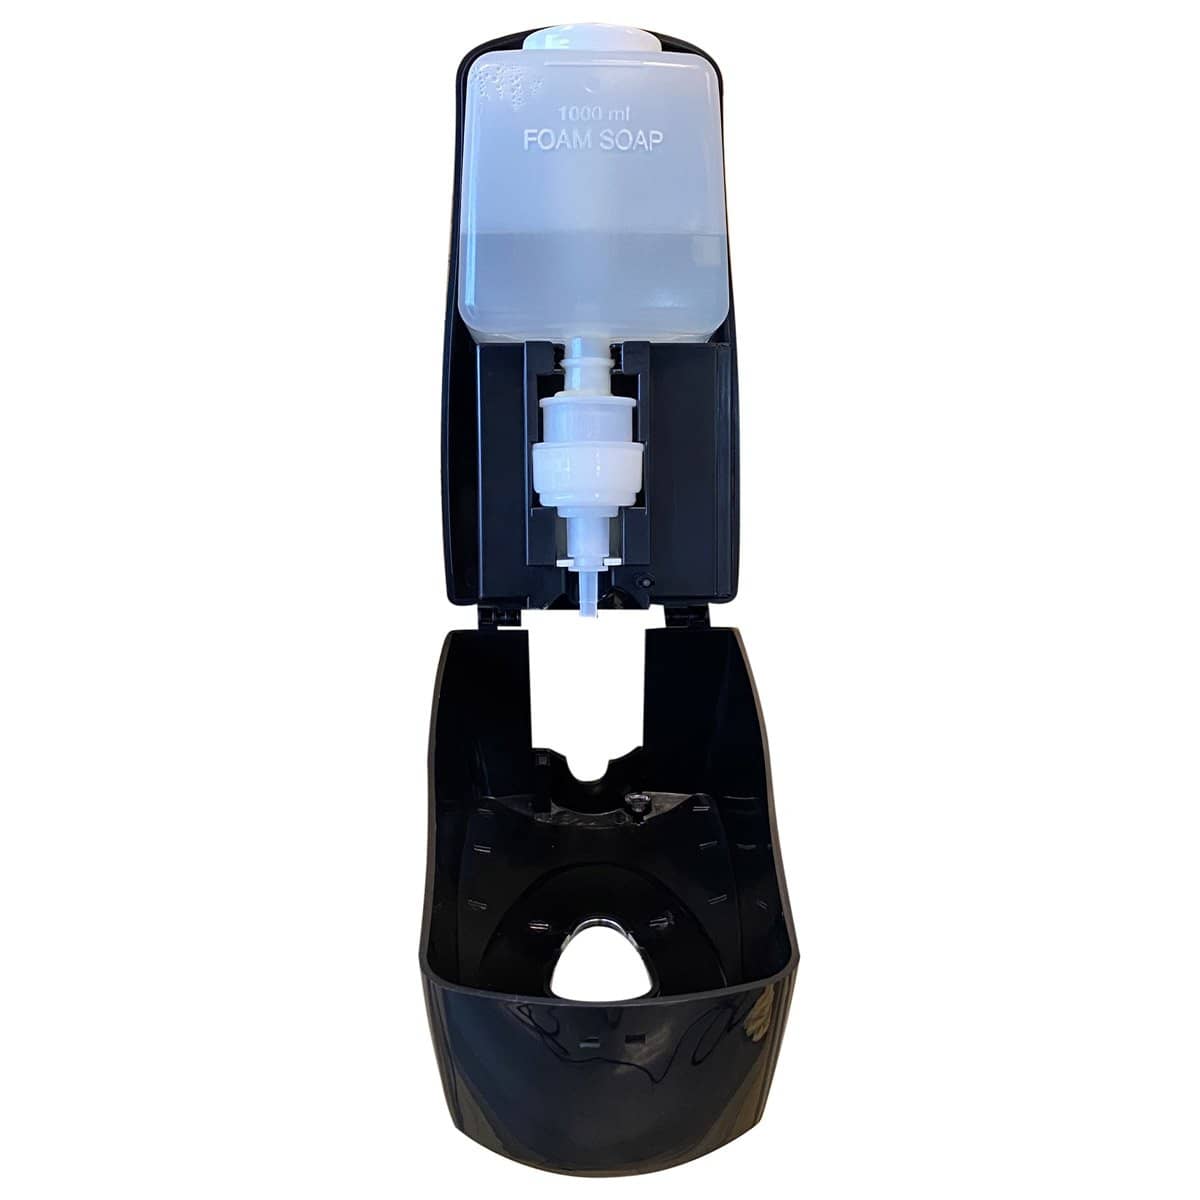 VISTA Electronic Soap Dispenser, Black - SD1003 - TotalRestroom.com